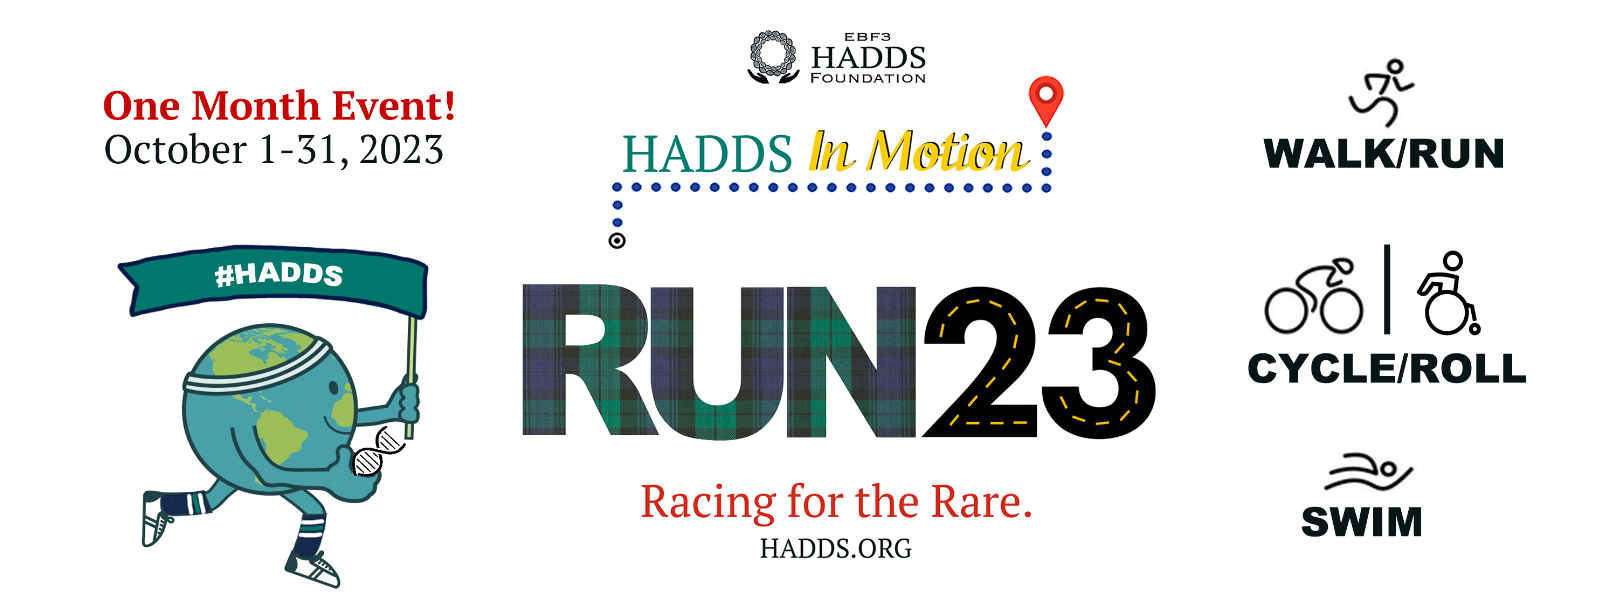 HADDS In Motion: Run23